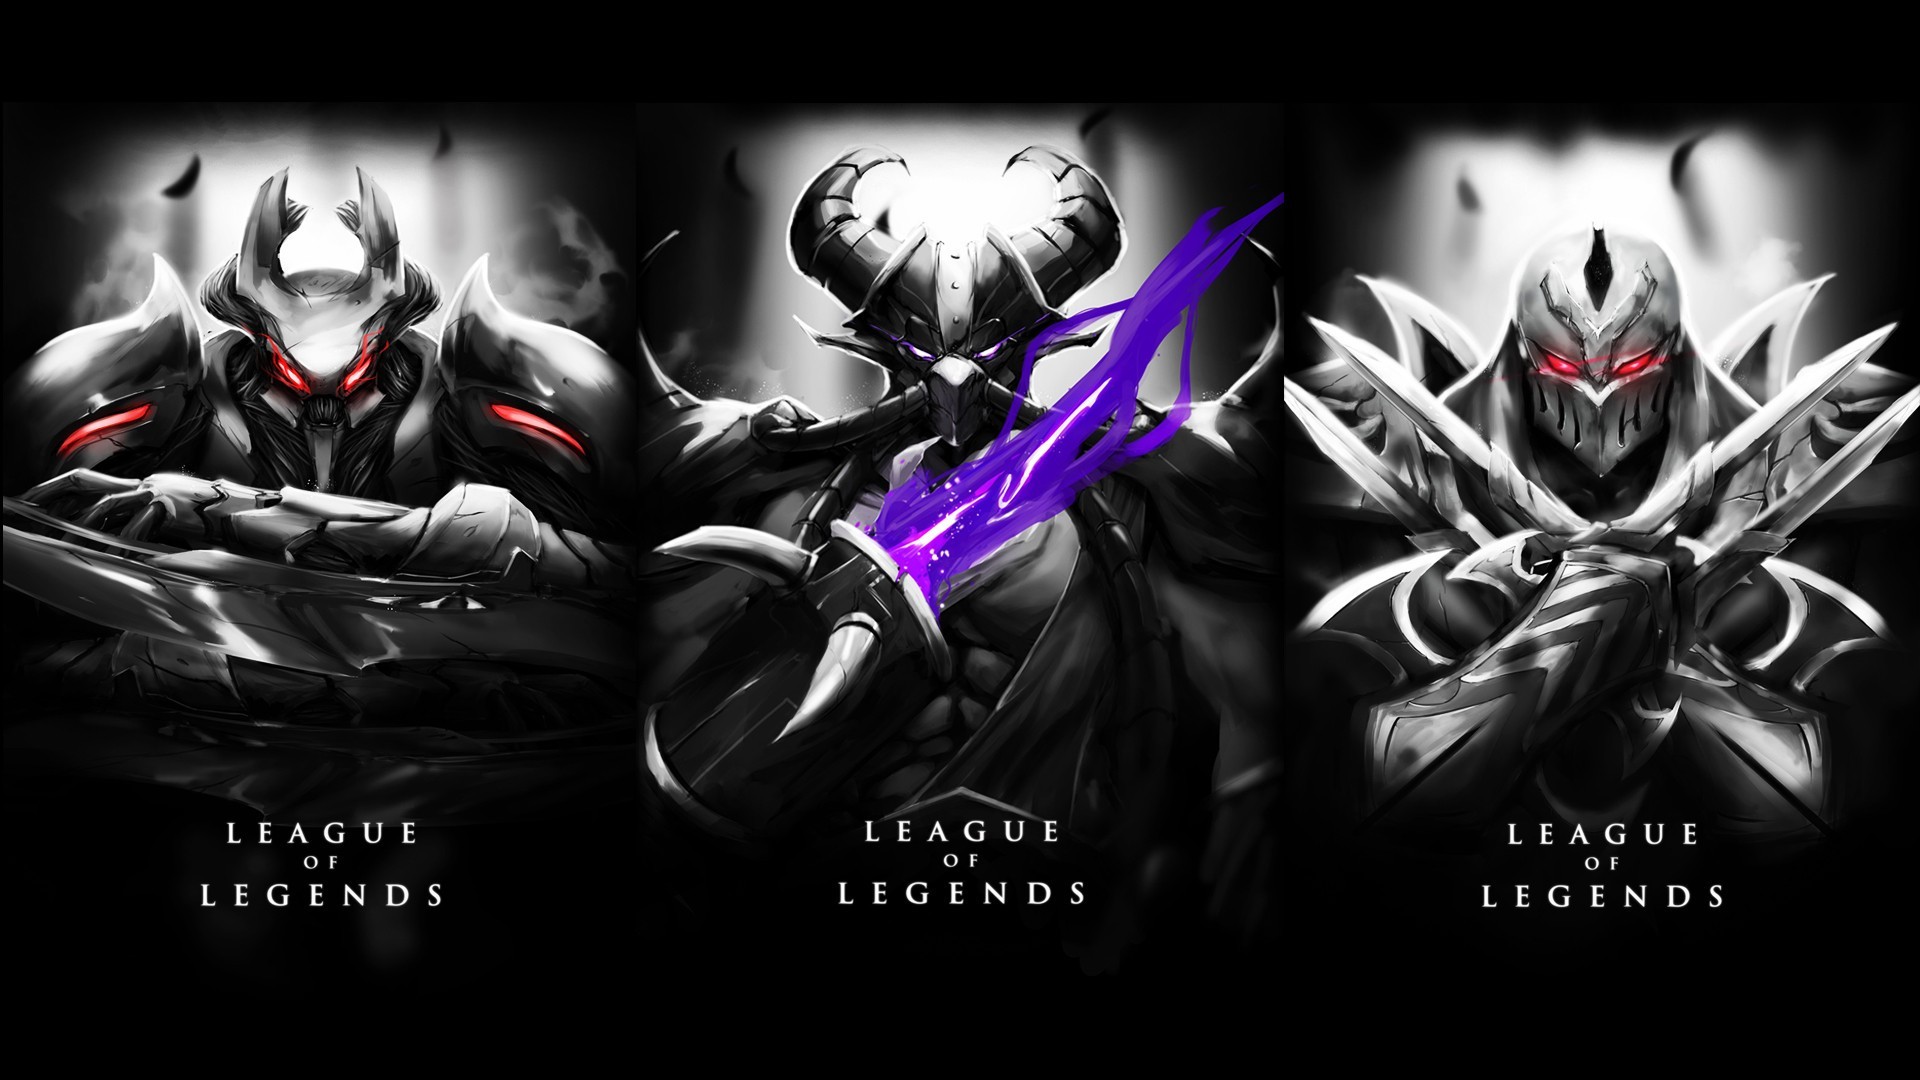 League Of Legends Nocturne Kassadin Zed Wallpapers Hd Desktop And Mobile Backgrounds 1920x1080